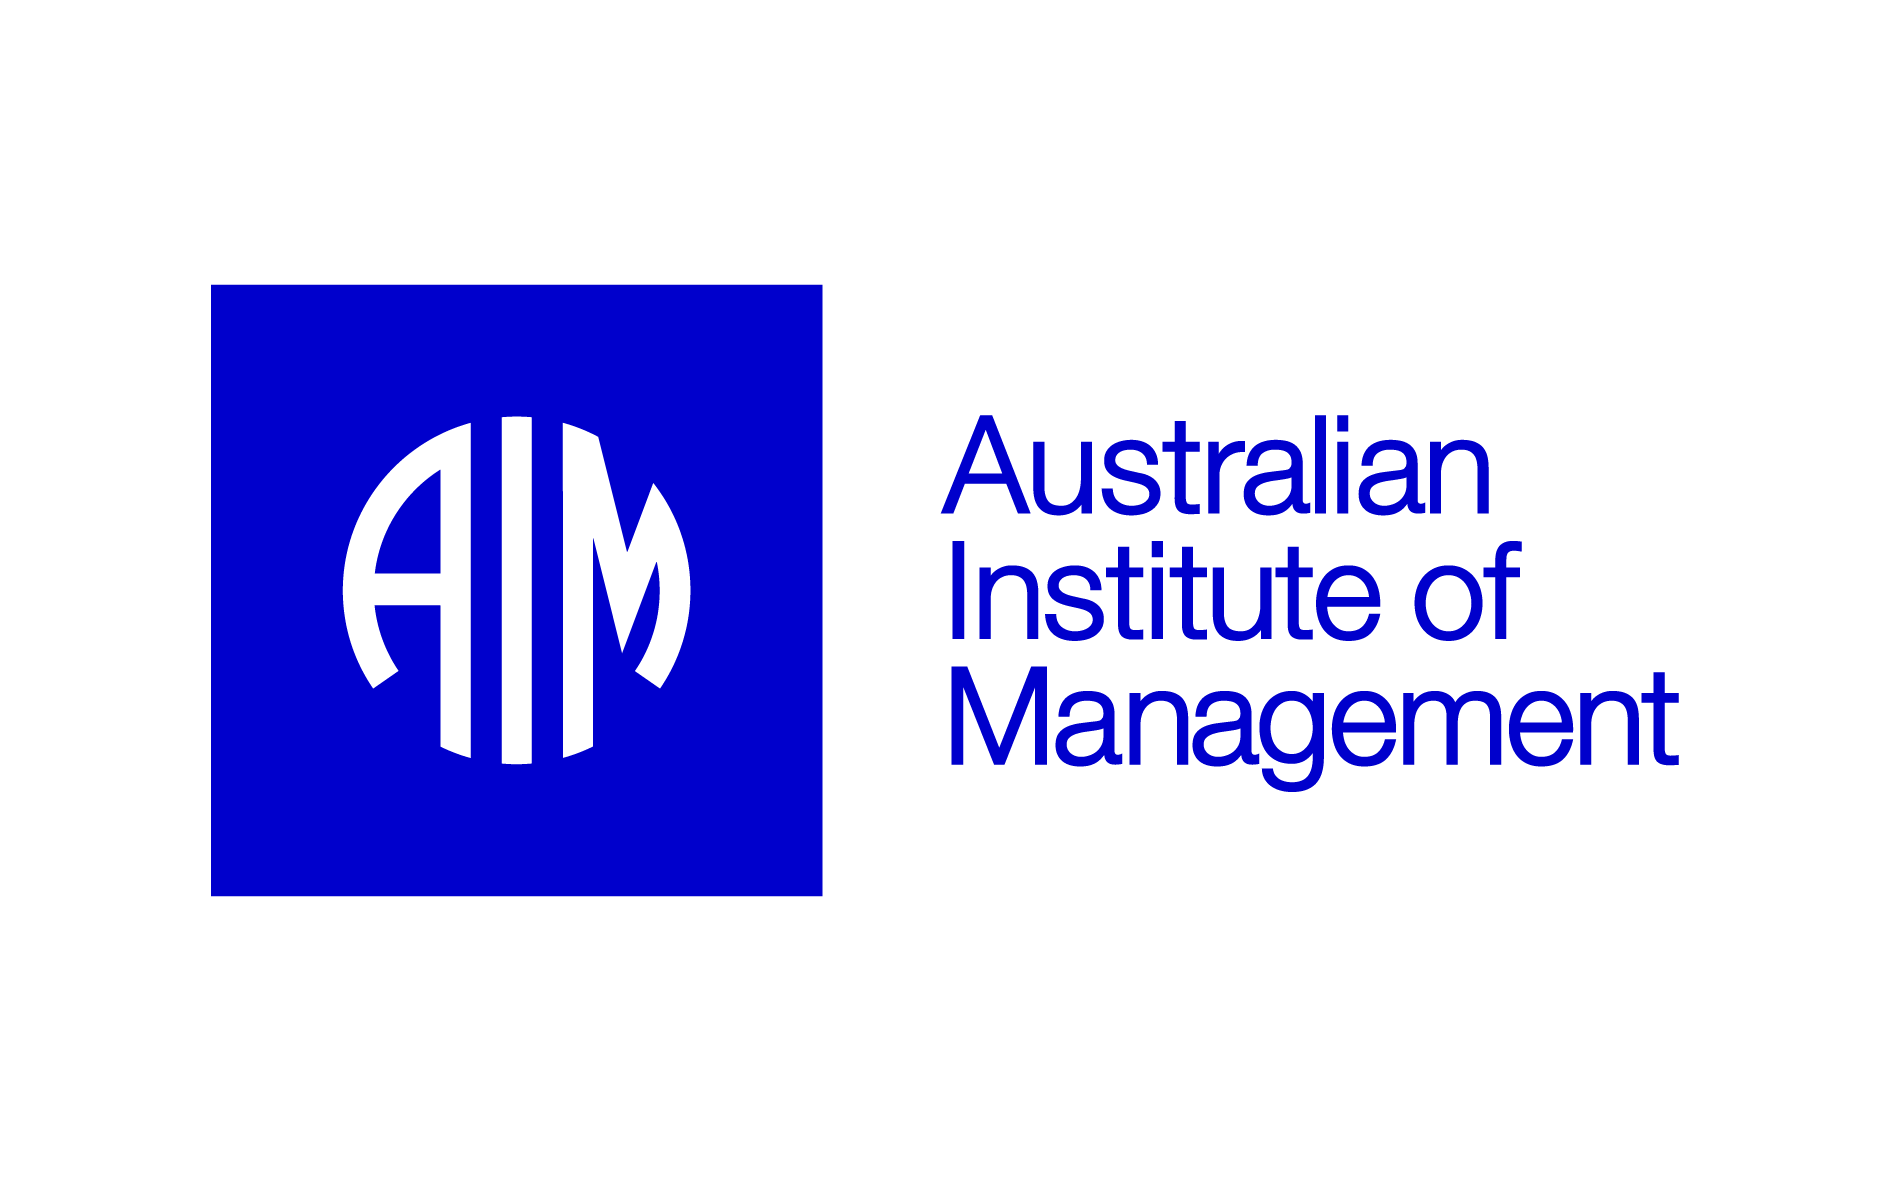 Australian Media Logo - Australia Institute of Management logo.png